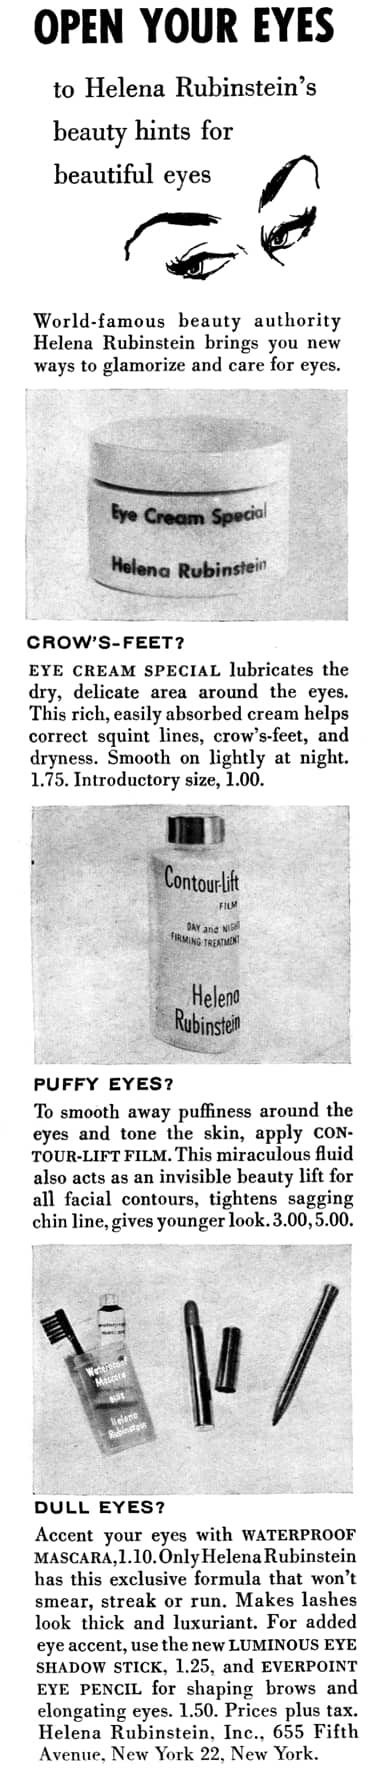 1955 Helena Rubinstein eye cosmetics